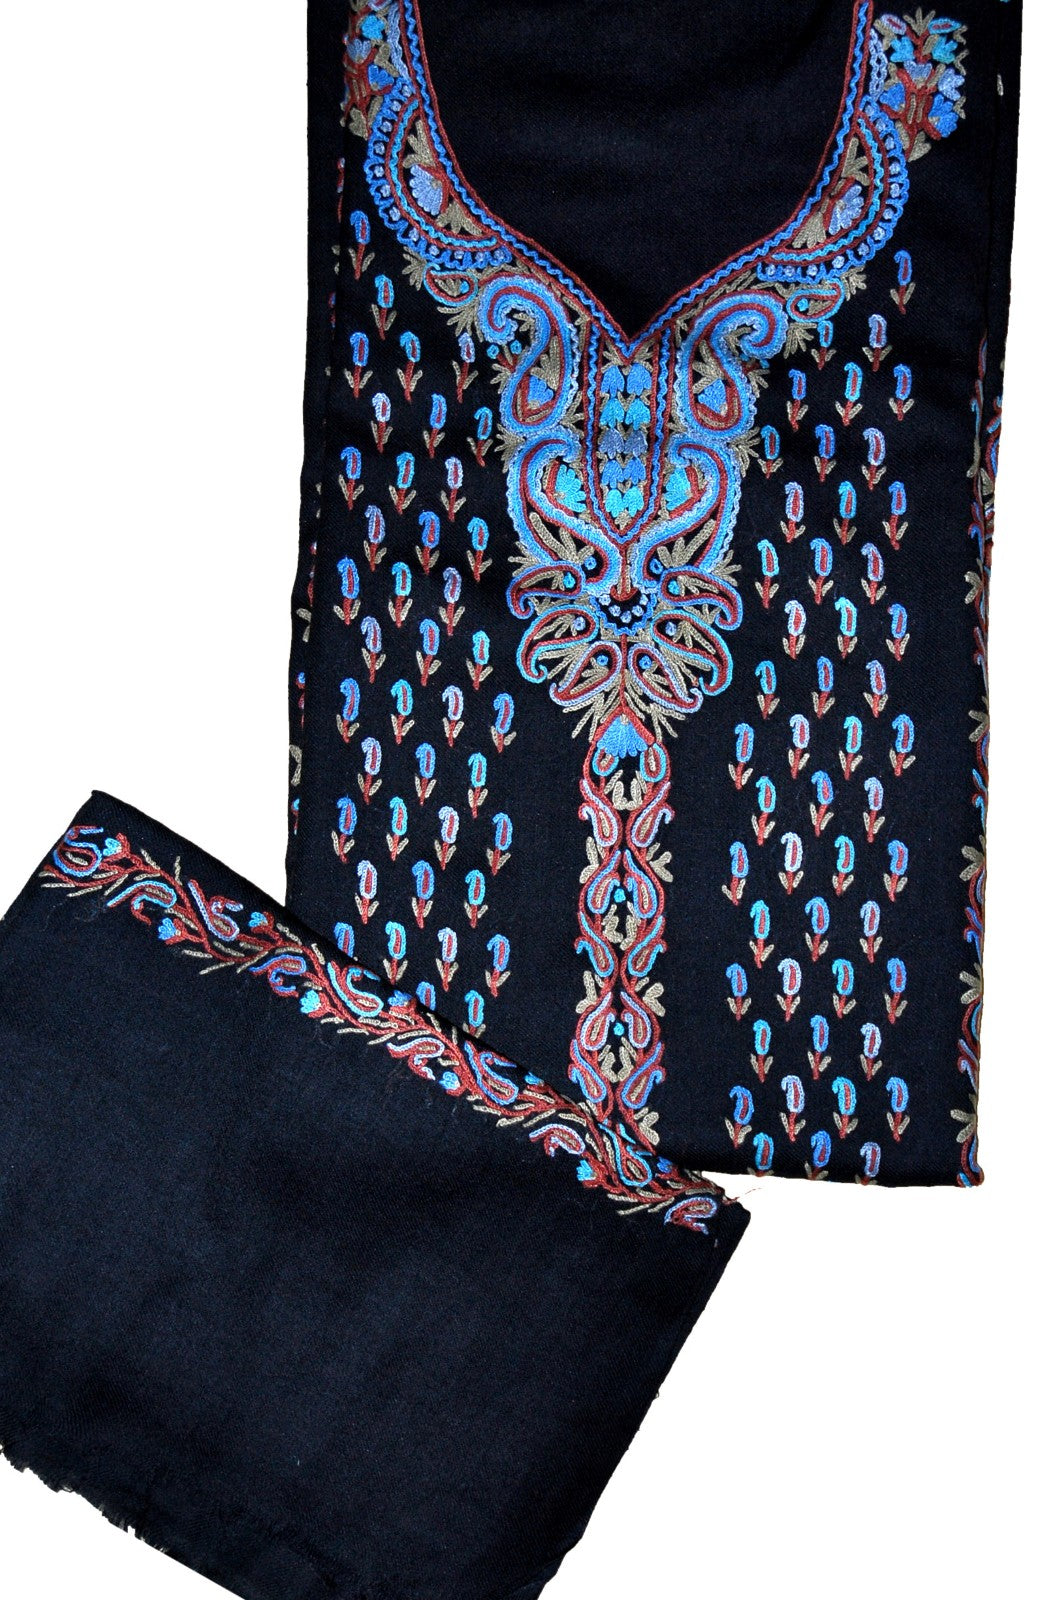 Woolen Salwar Kameez + Shawl Black, Multicolor Embroidery #FS-421